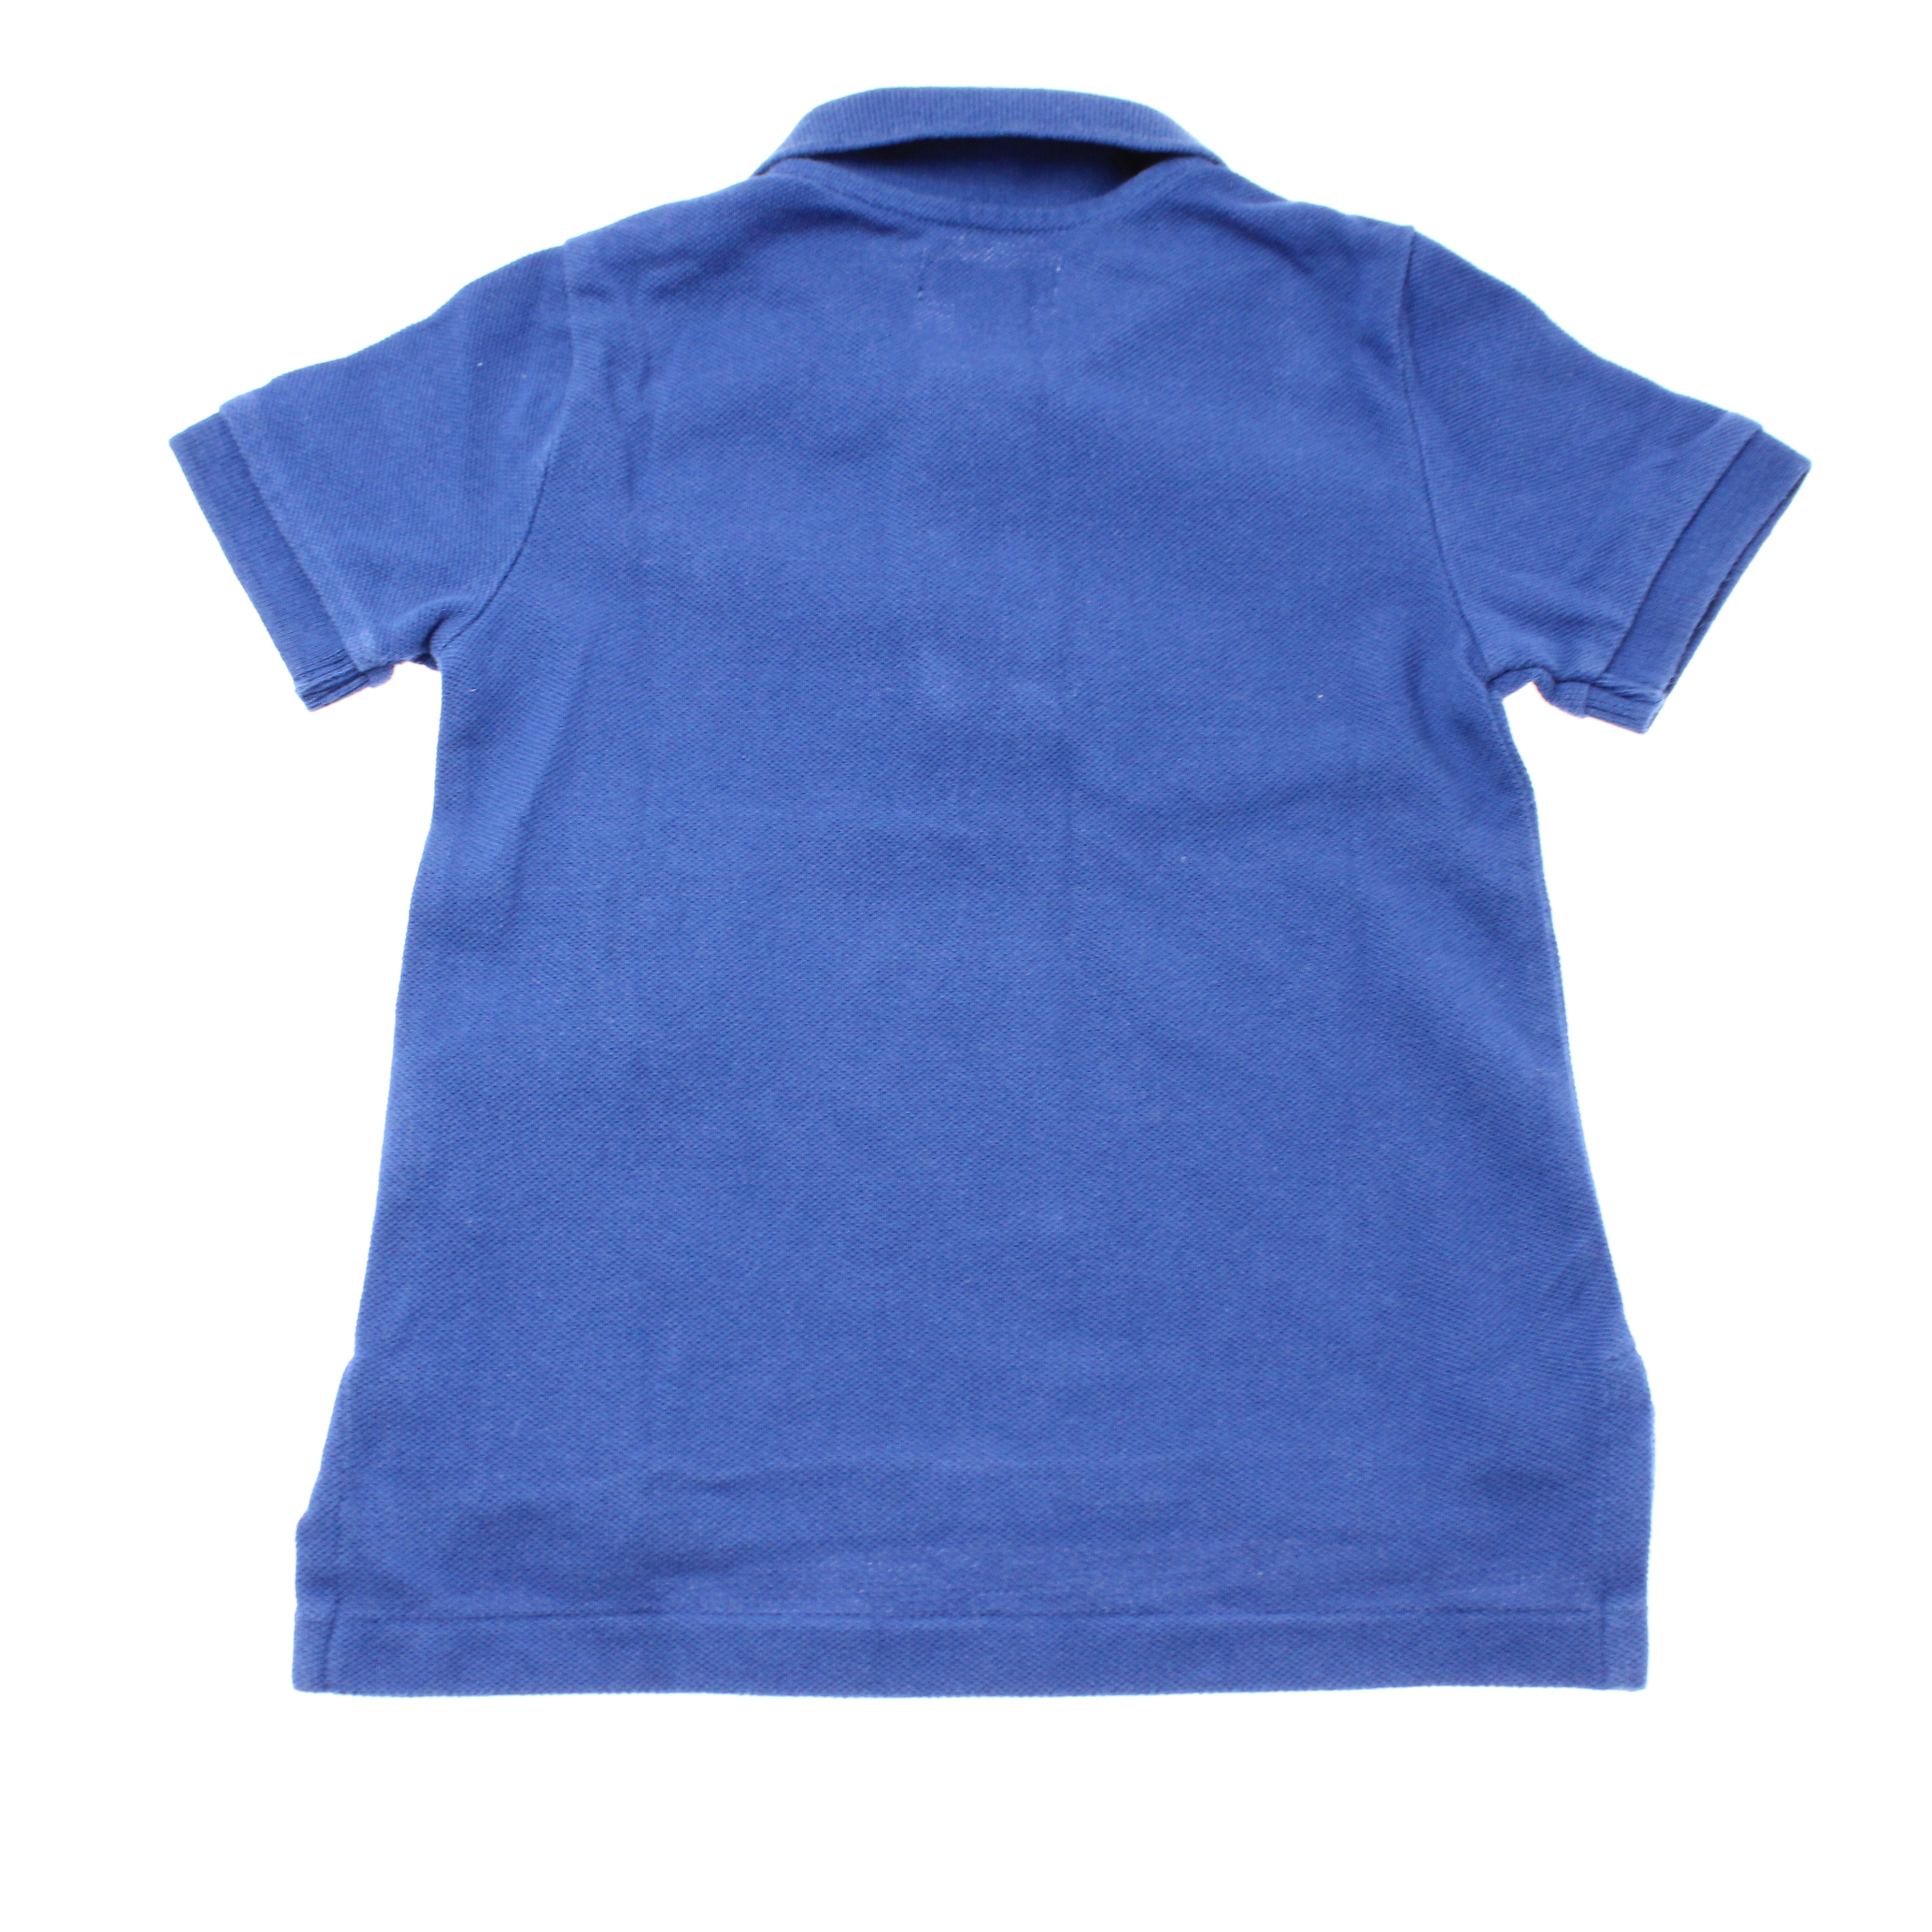 Camisa Polo Ralph Lauren Original Azul e Amarela Infantil, ralph lauren  brasil 